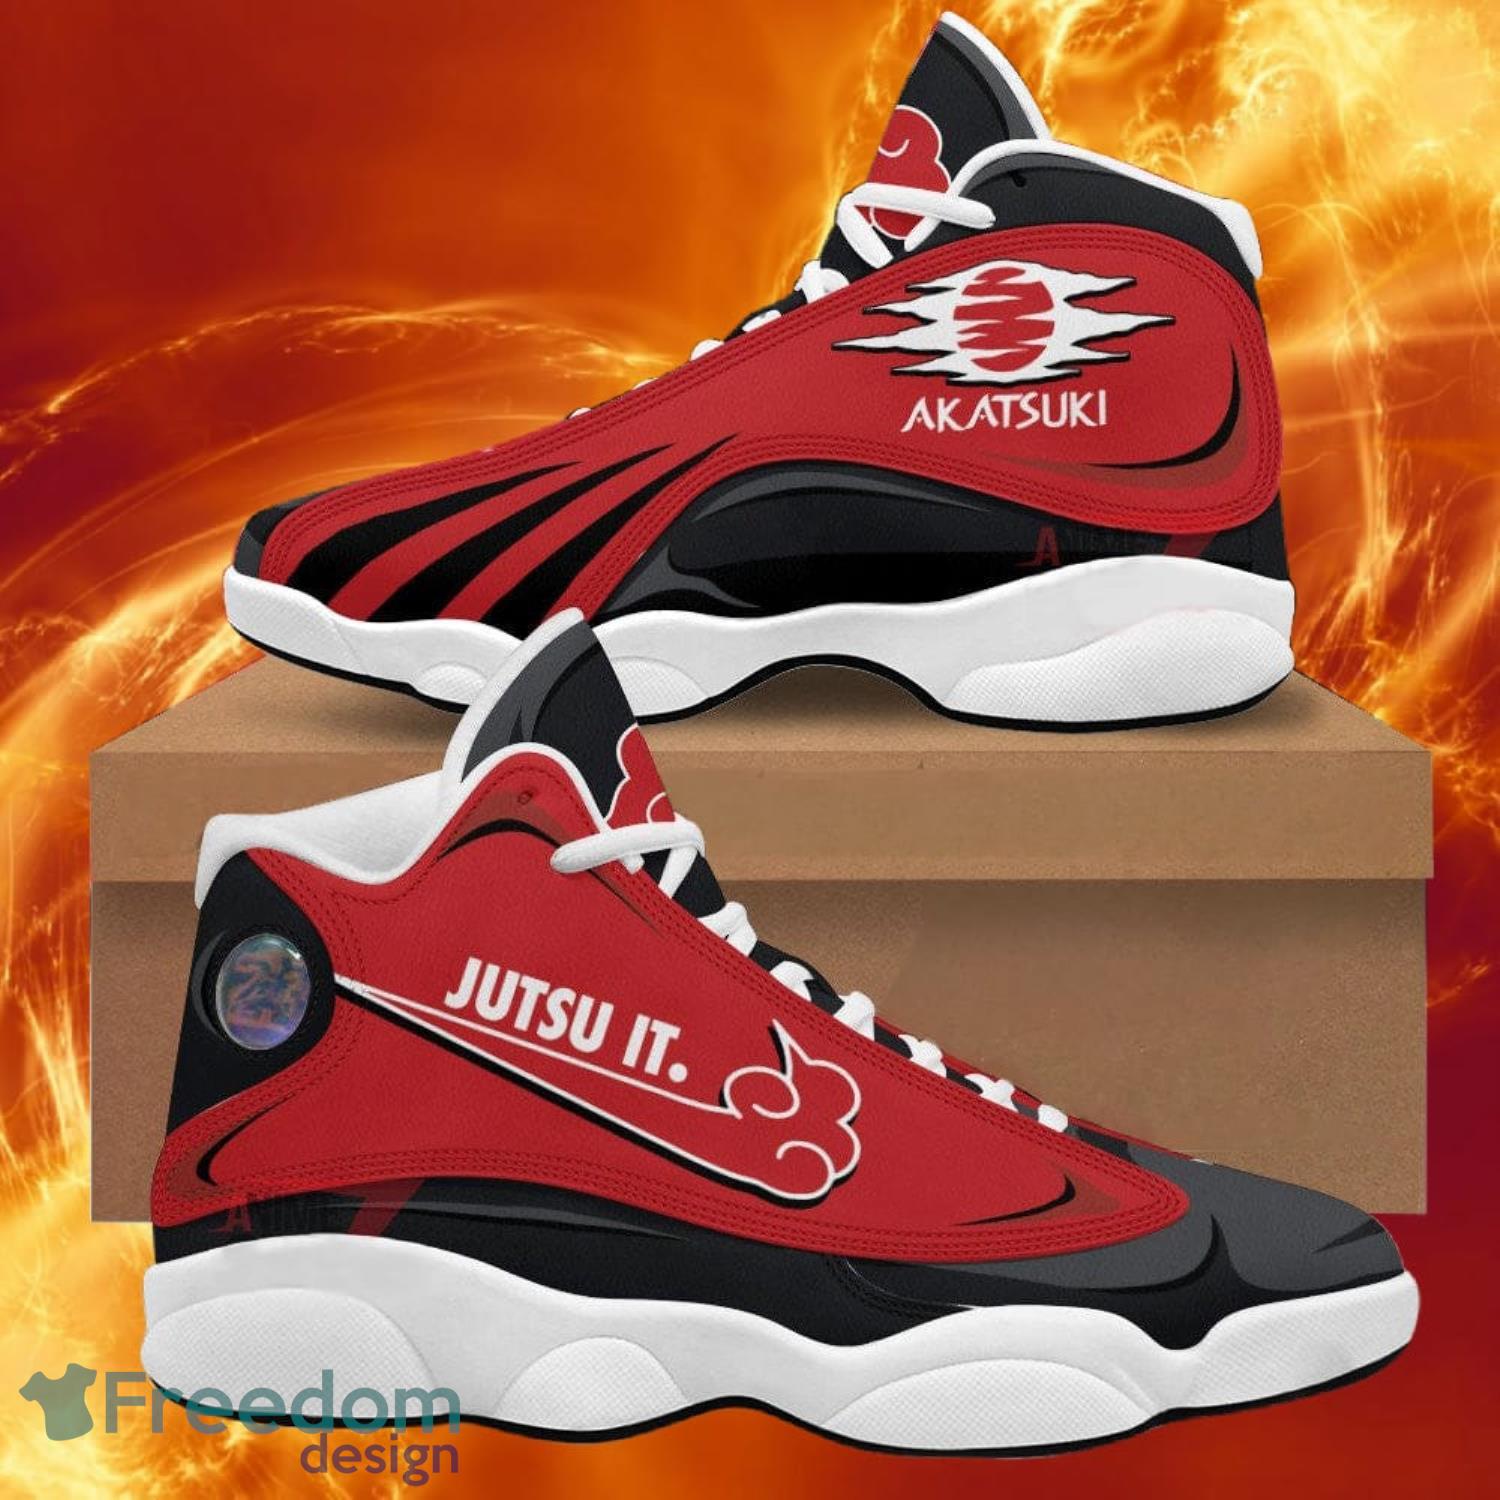 Akatsuki Jutsu It Air Jordan 13 Sneakers Naruto Anime Shoes Gift For Fans Product Photo 1